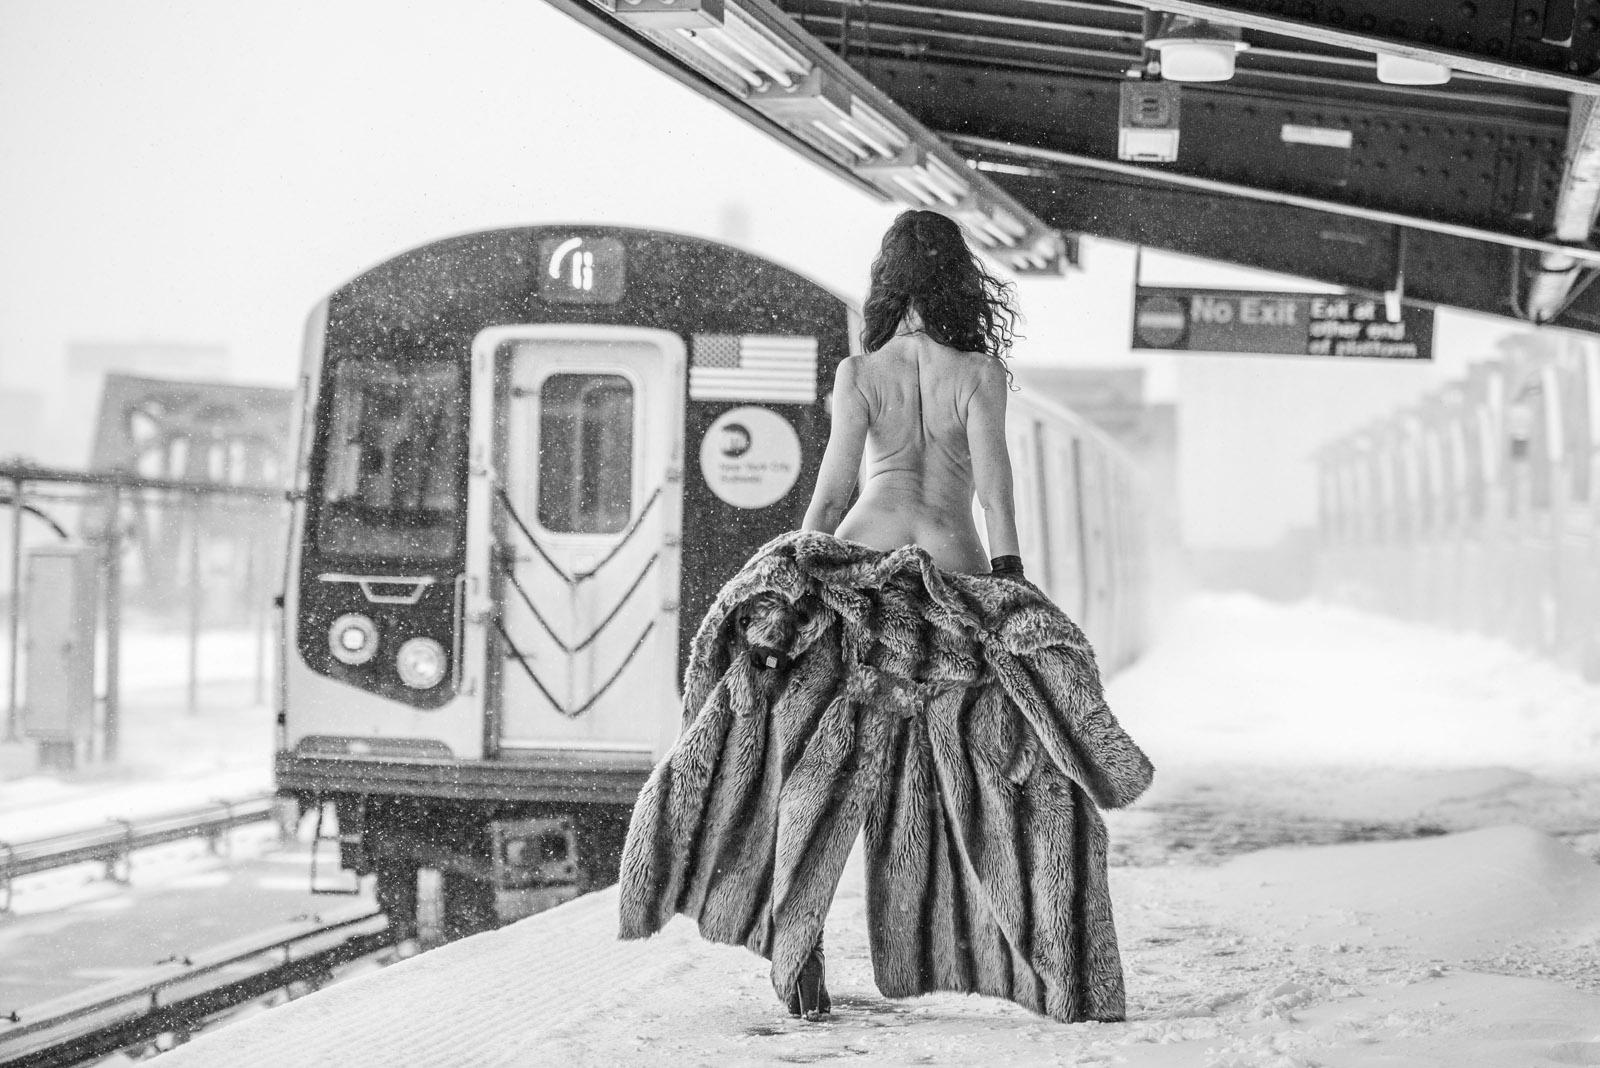 John Mazlish Nude Photograph - "Missed Connection"- Black & White Nude Photo, Brooklyn, NY